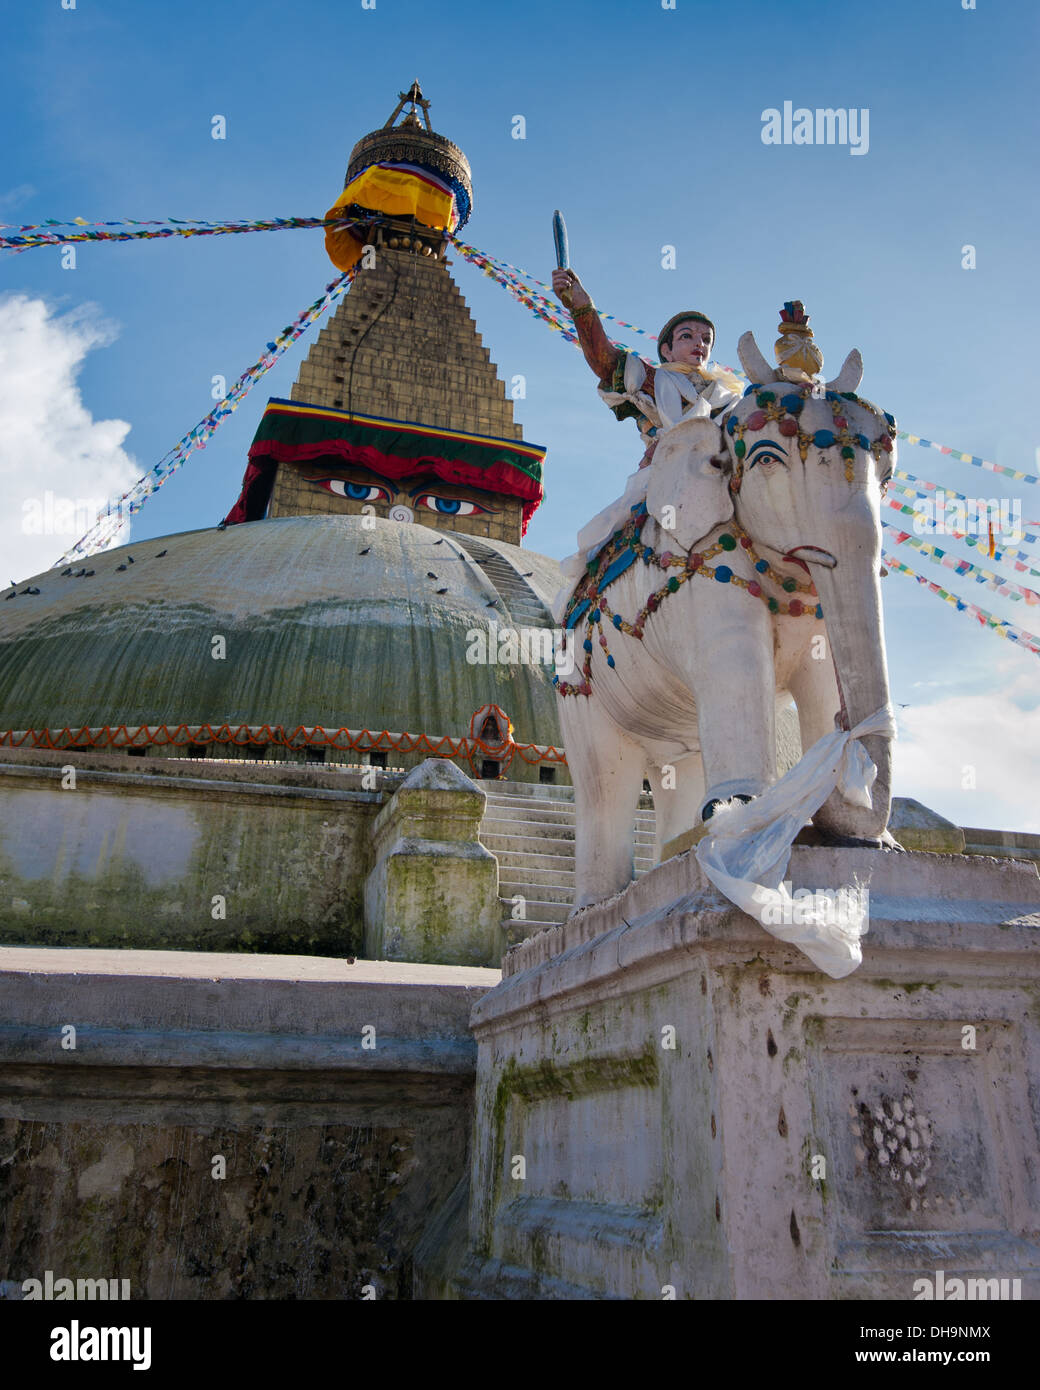 Buddhist Shrine Boudhanath Stupa with pray flags over blue sky. Nepal, Kathmandu Stock Photo